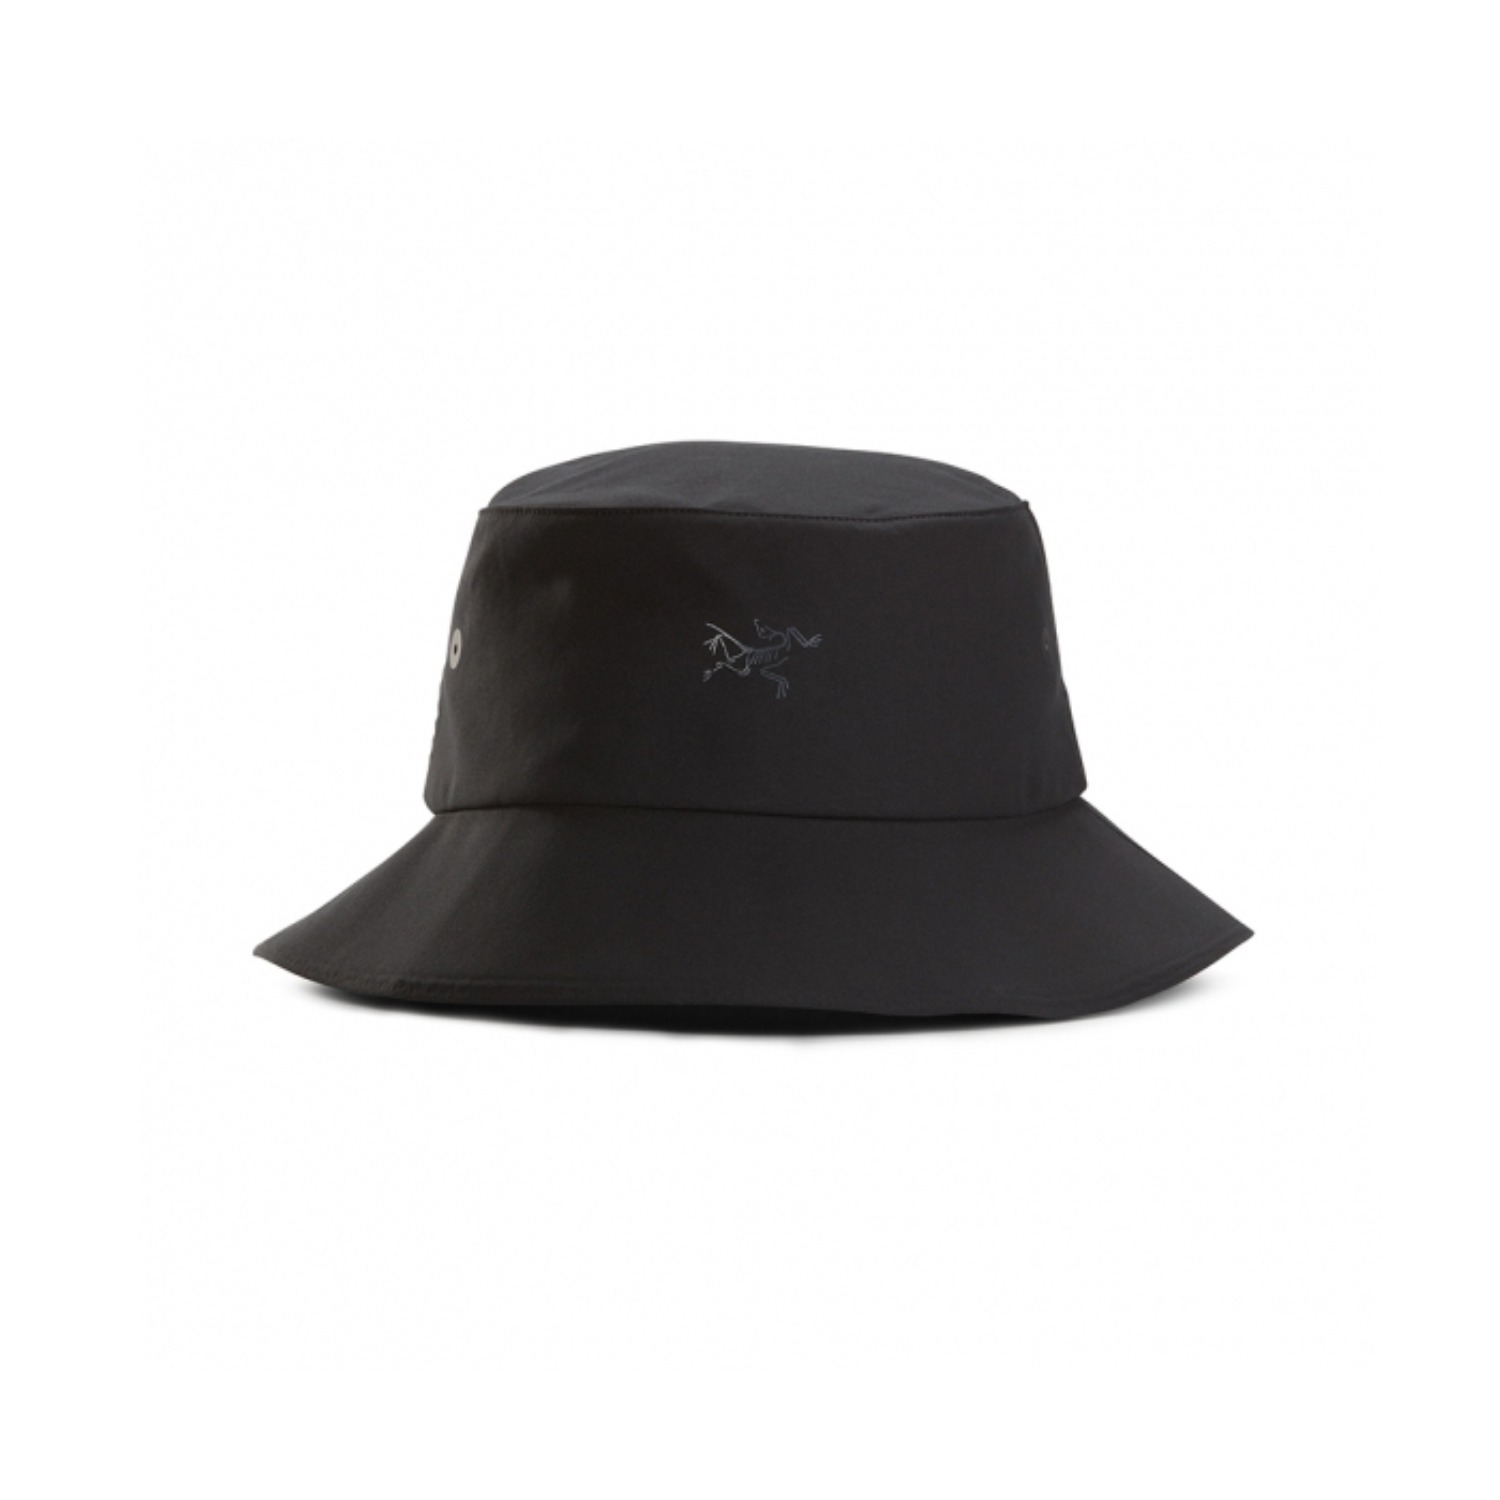 sinsolo hat black